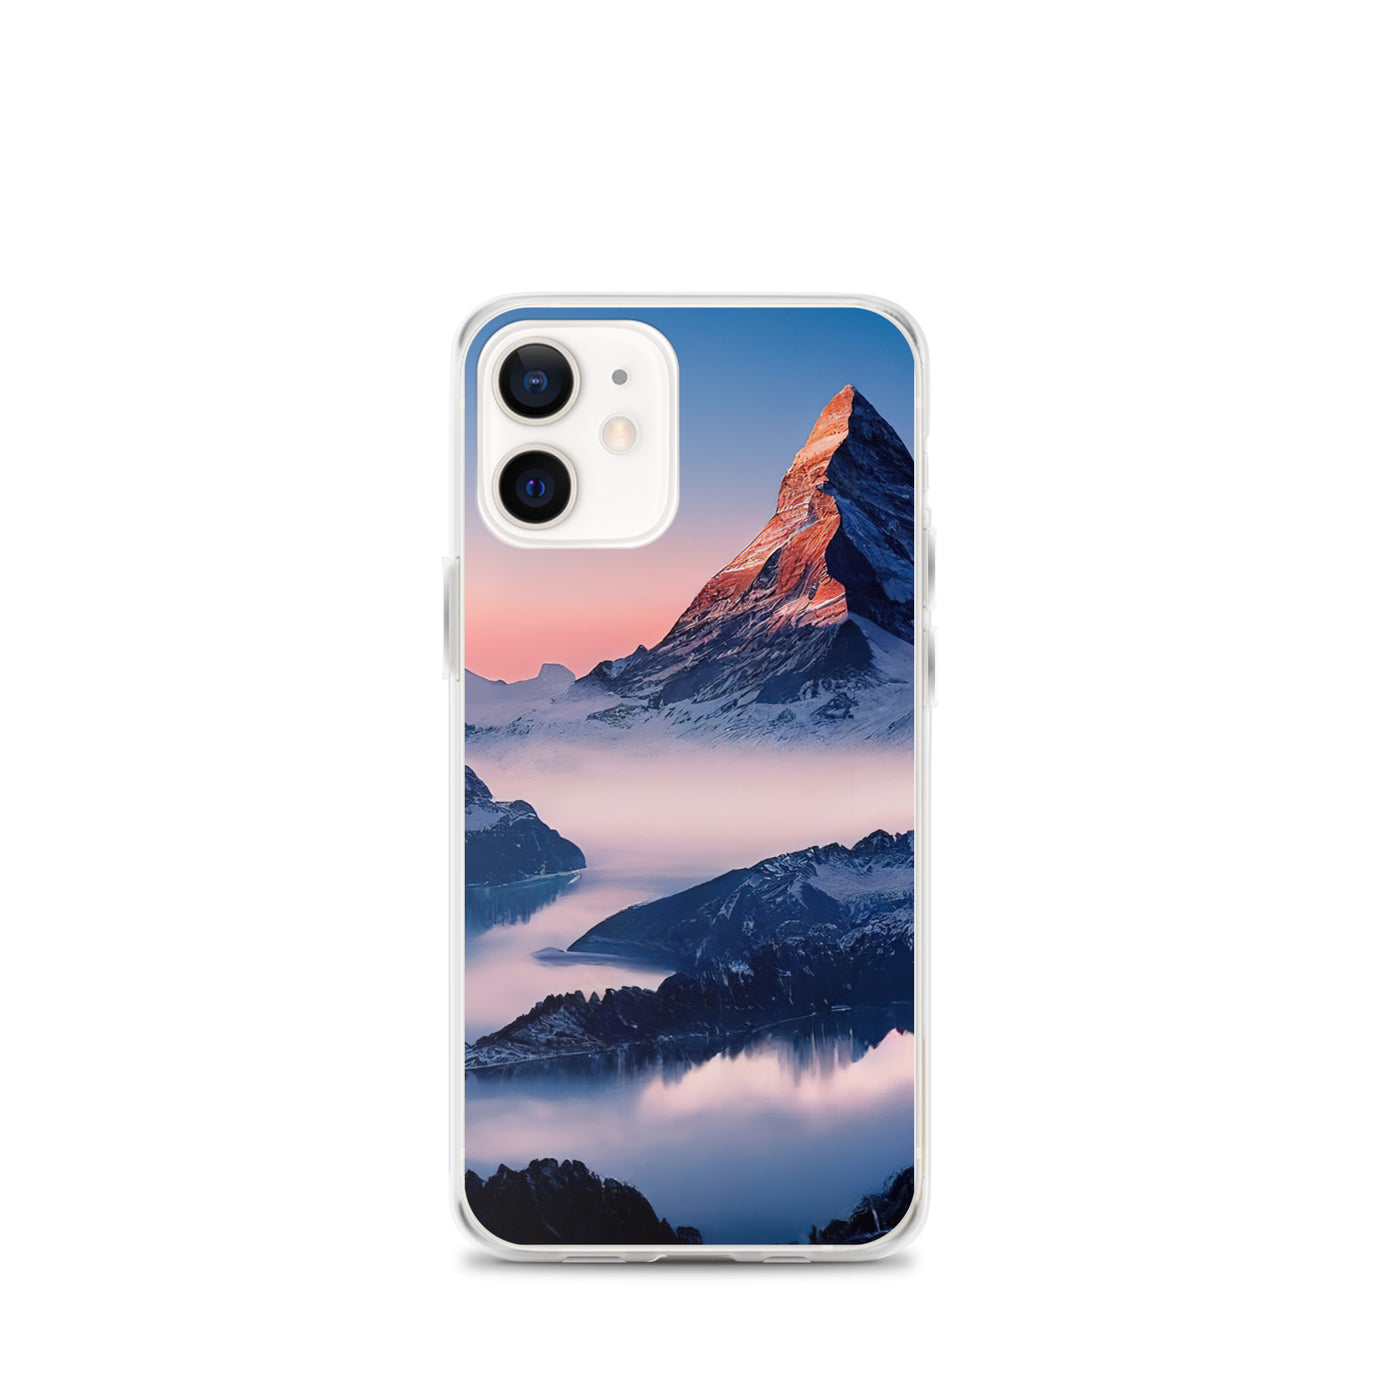 Matternhorn - Nebel - Berglandschaft - Malerei - iPhone Schutzhülle (durchsichtig) berge xxx iPhone 12 mini